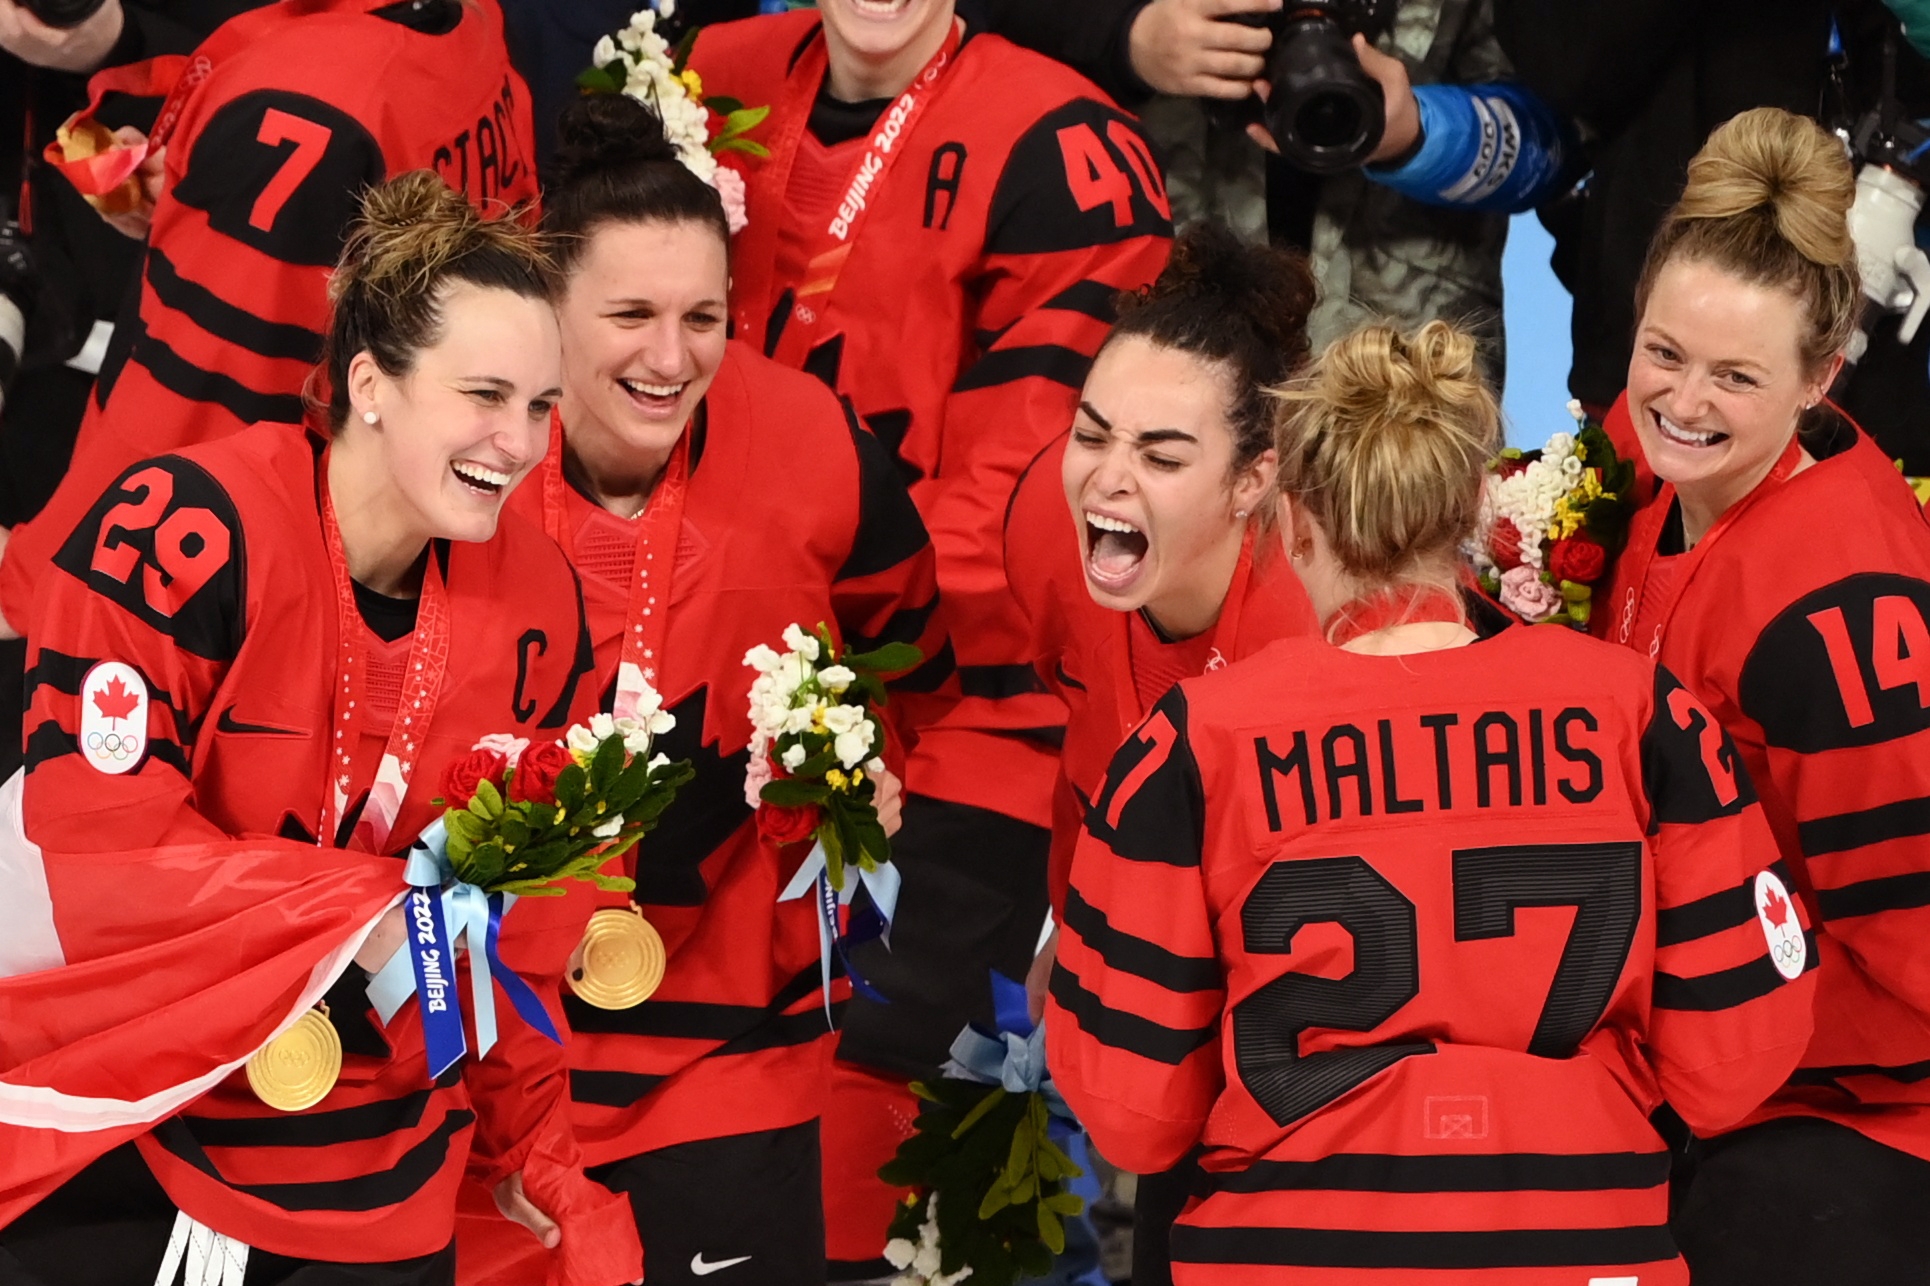 Team Canada wins women's hockey gold at Beijing 2022 - Team Canada